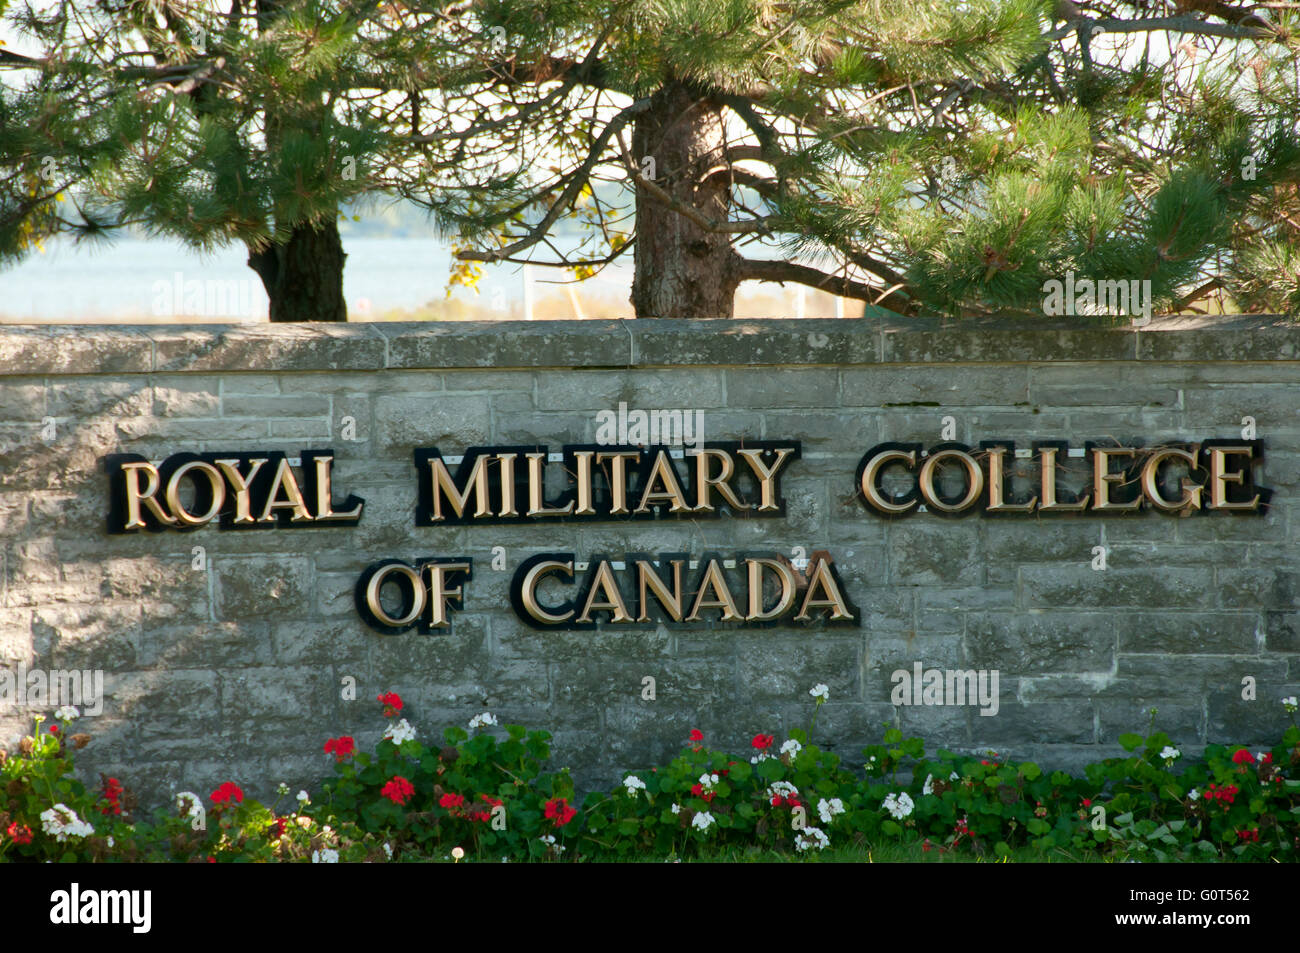 Collège militaire royal - Kingston - Canada Banque D'Images